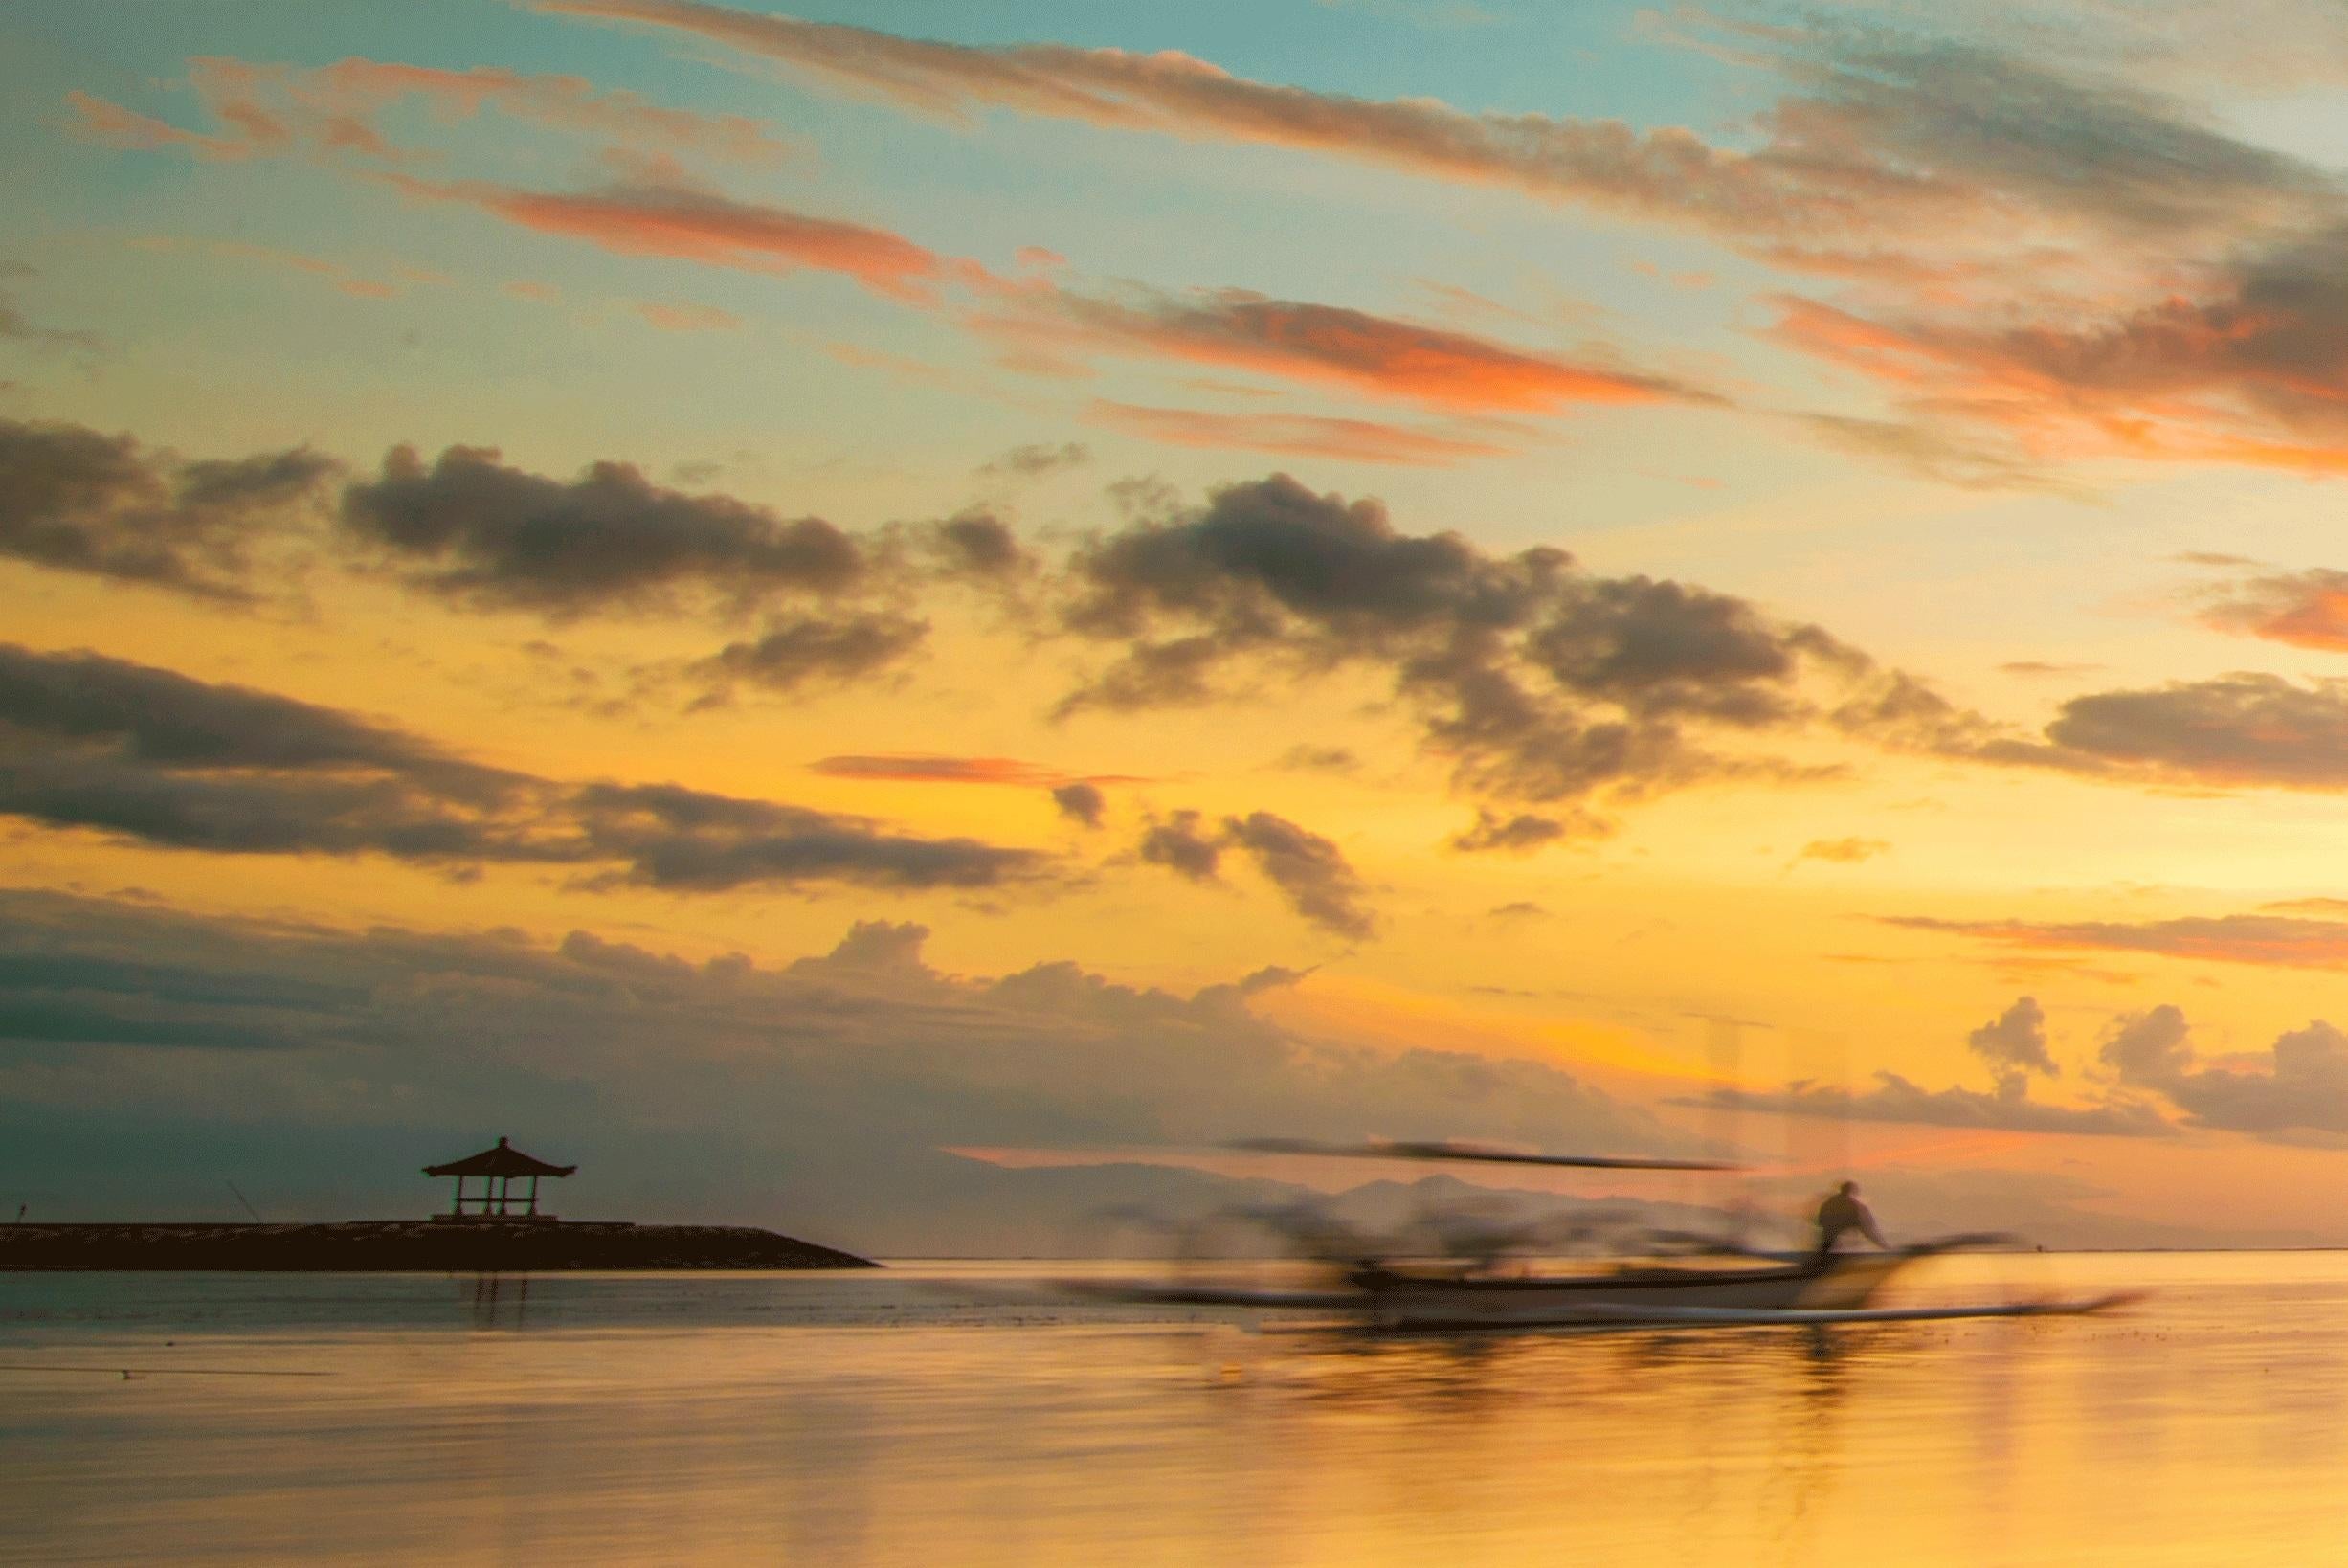 Bali, Asia - Photography Travel Waterfront Boats Nature Colour Sunset Dibond - Gray Landscape Photograph by KiLynn (Ki) Tan